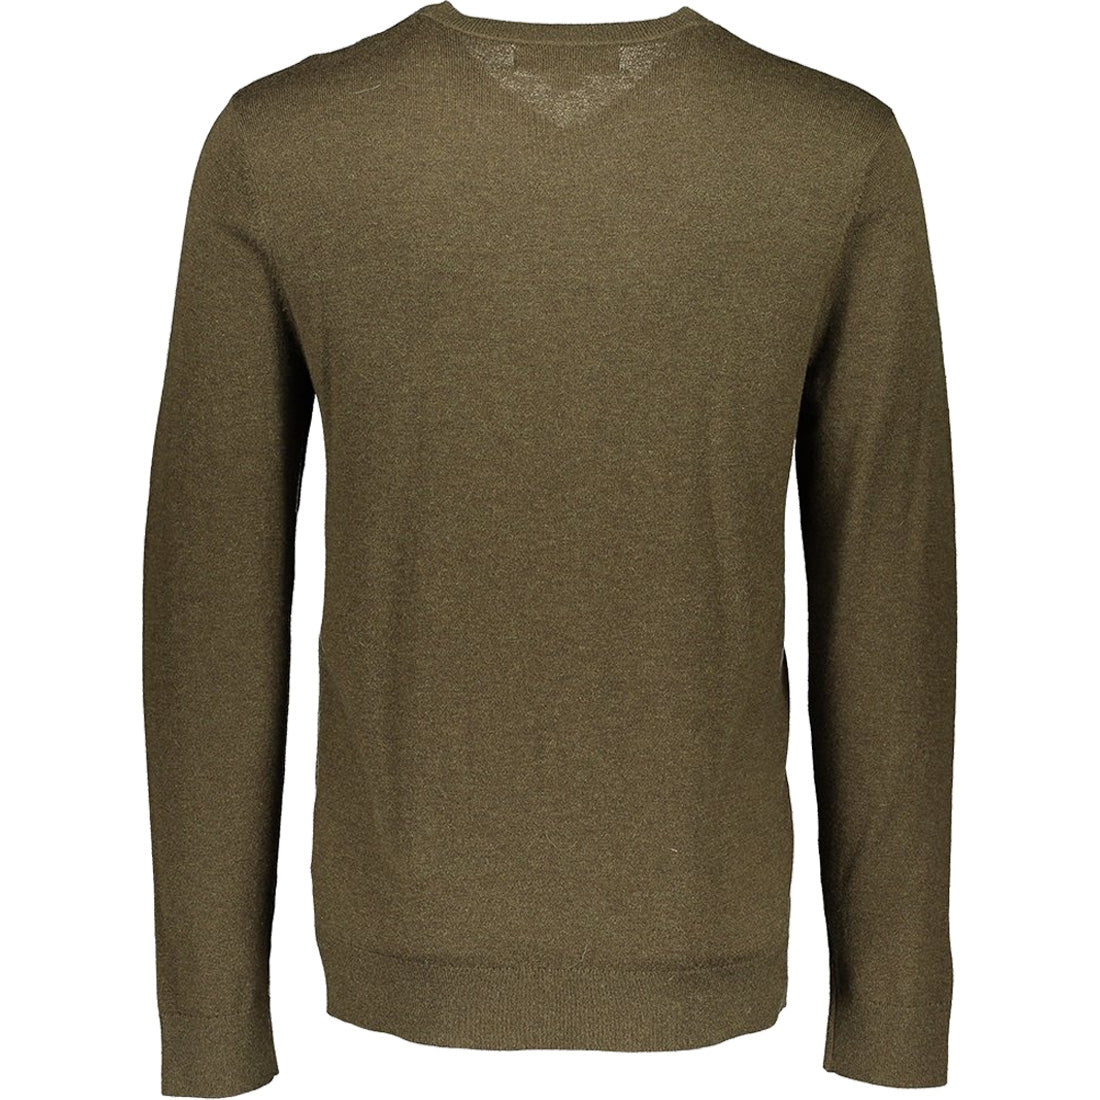 Obermeyer Mason Sweater (Past Season) - Men's